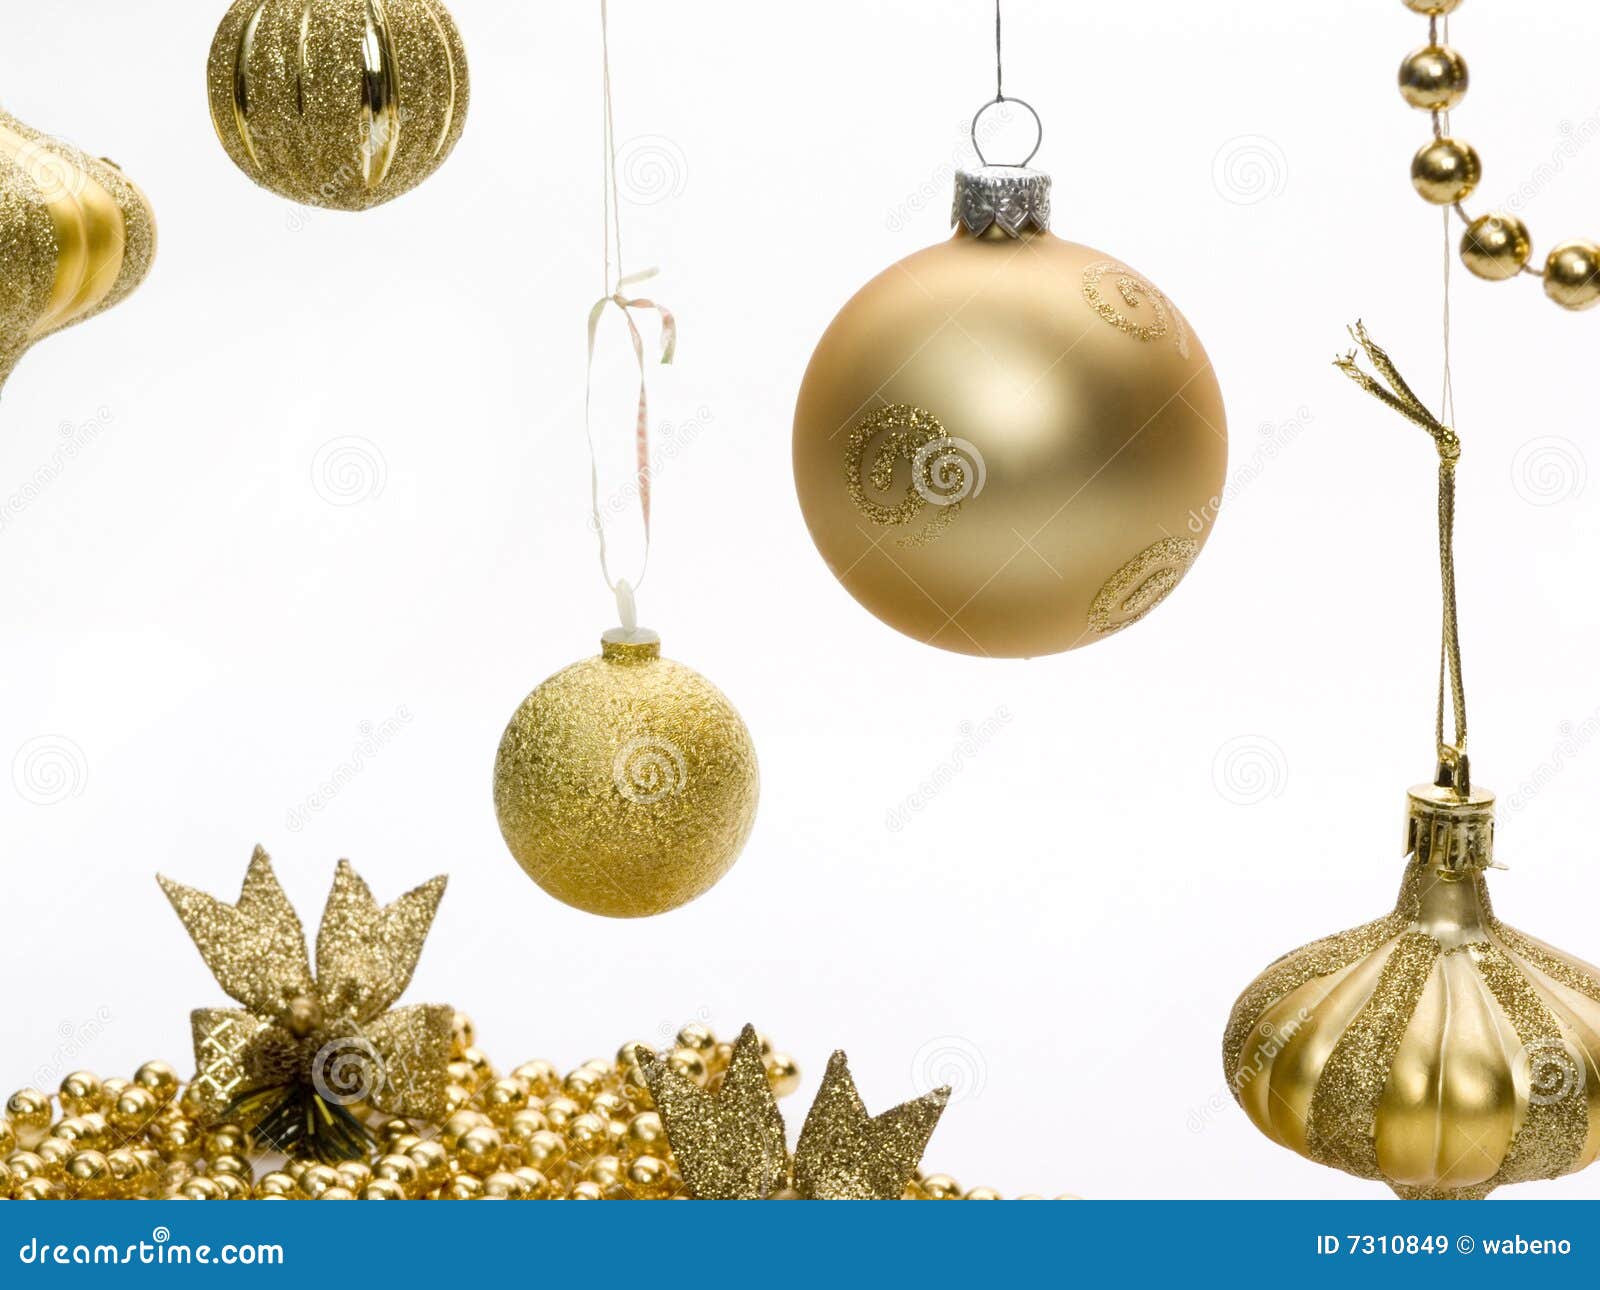 Christmas gold ornaments stock image. Image of plaid, holiday - 7310849